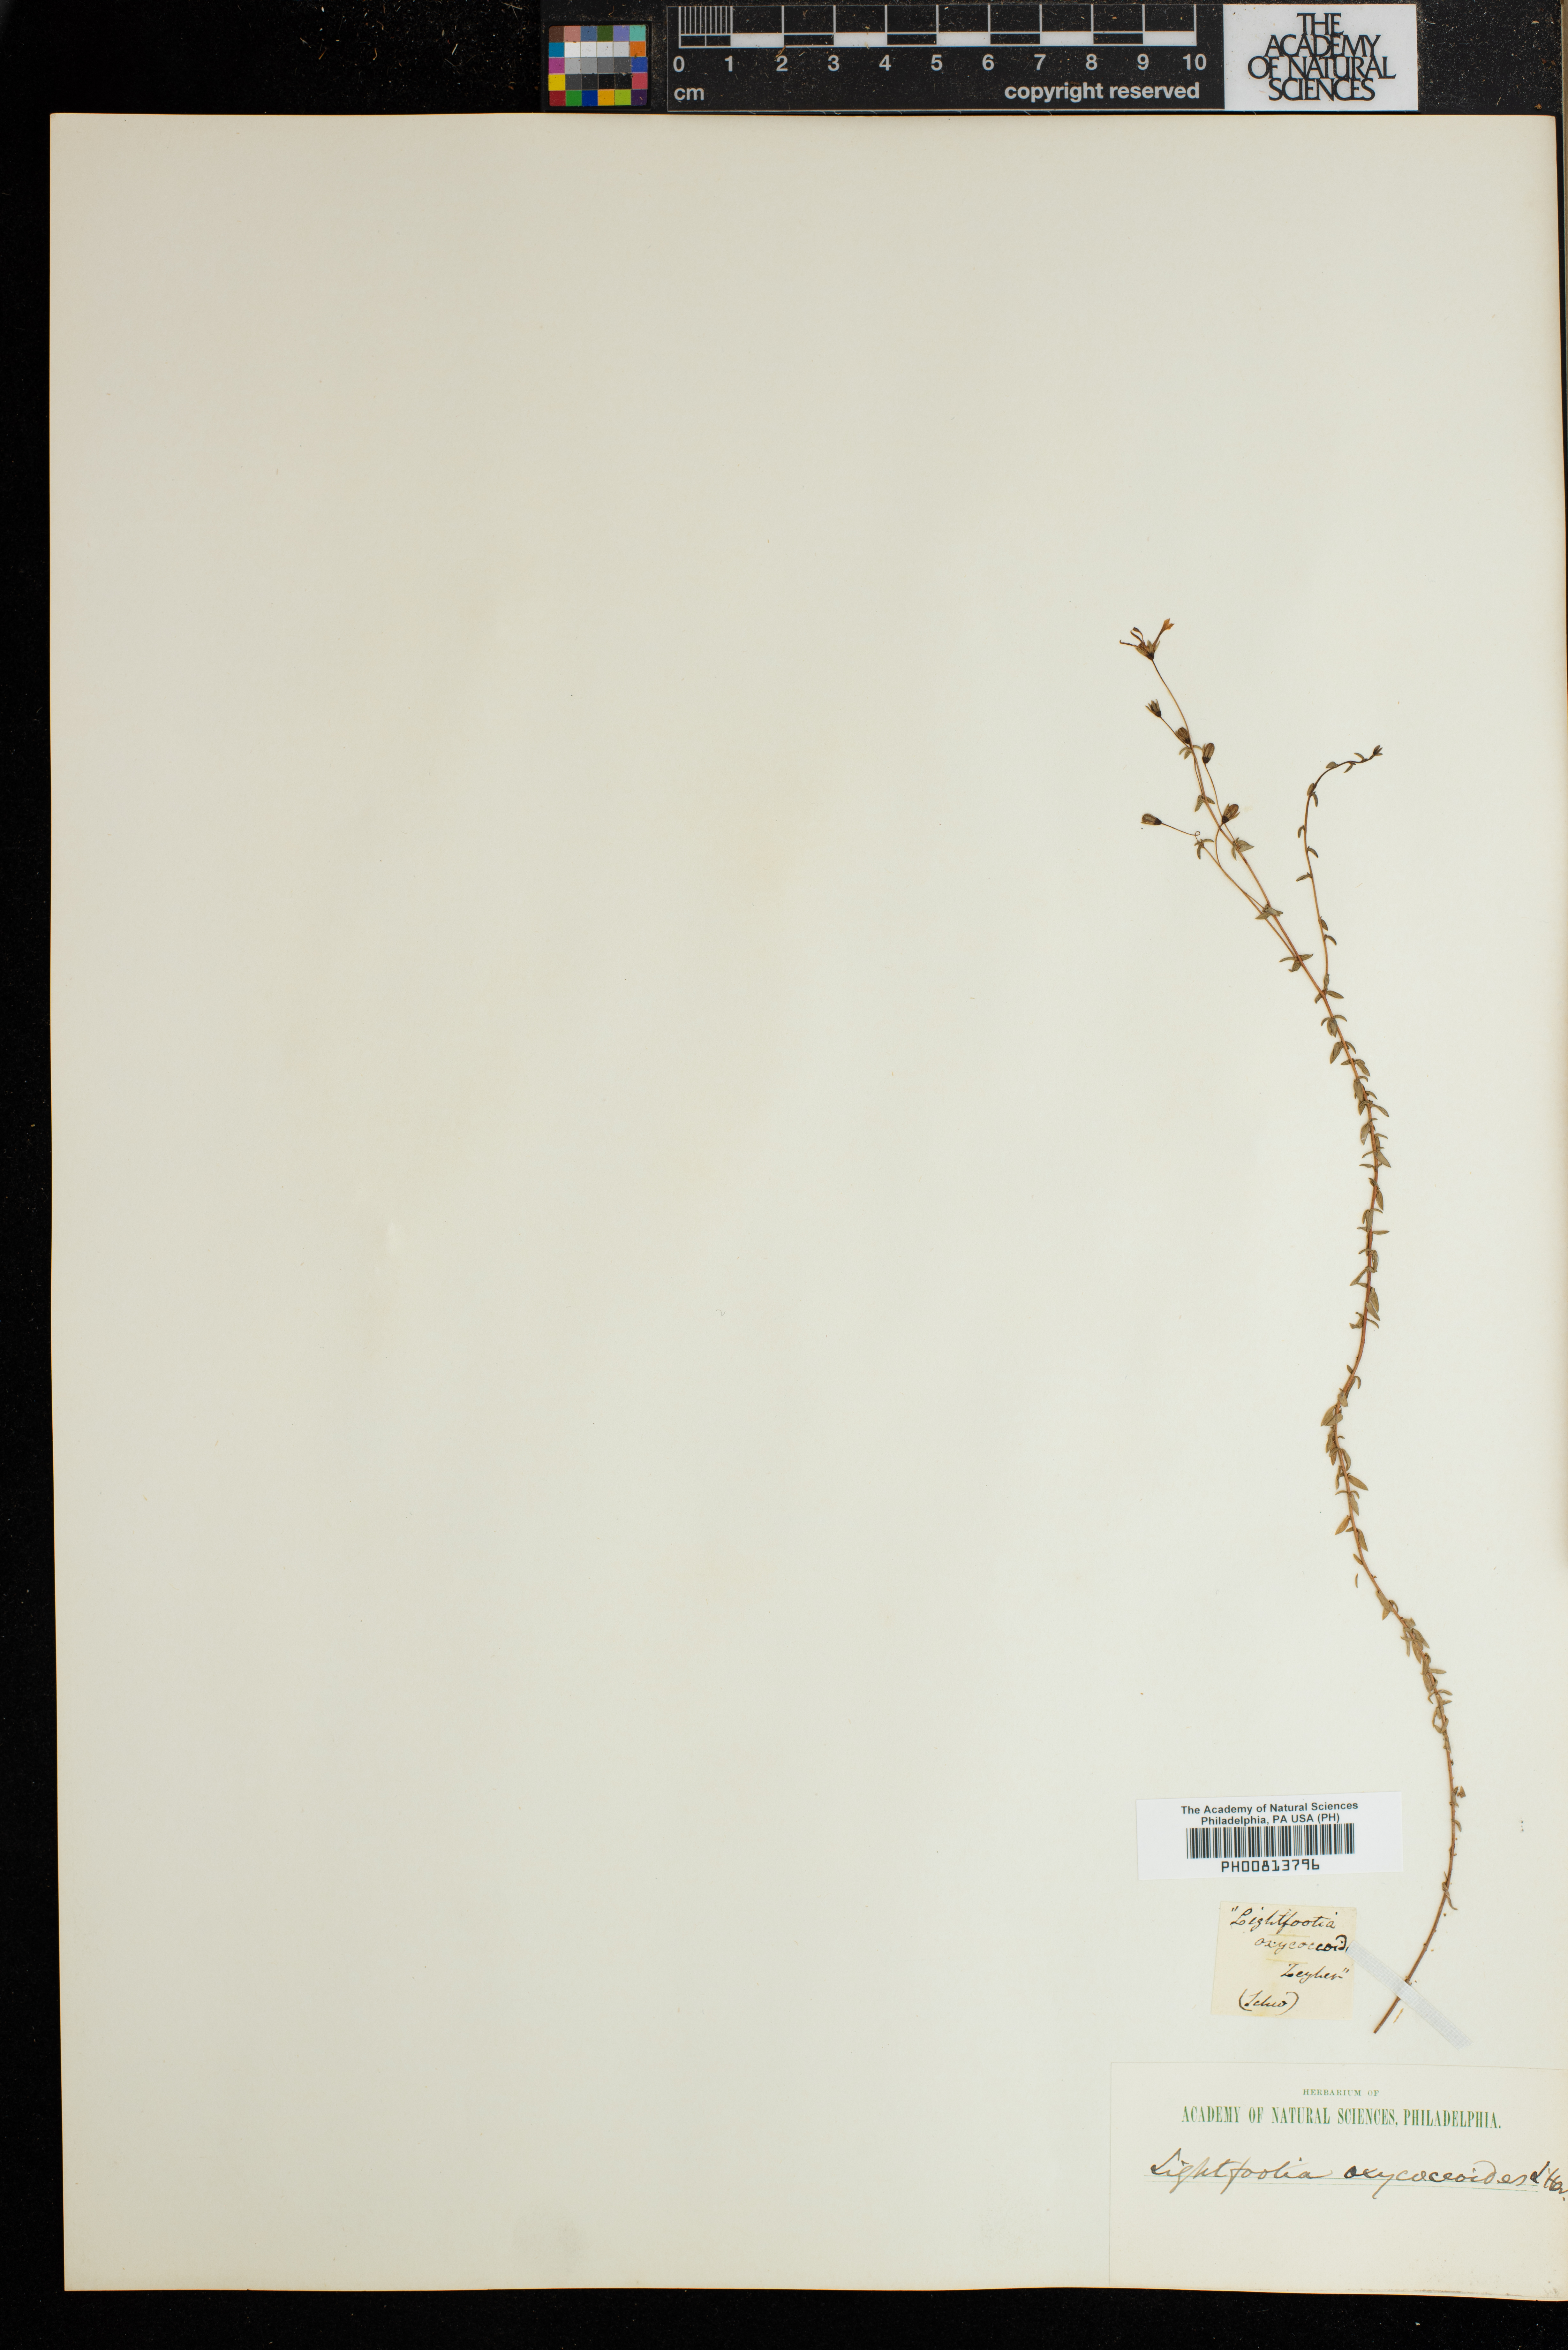 Wahlenbergia parvifolia image